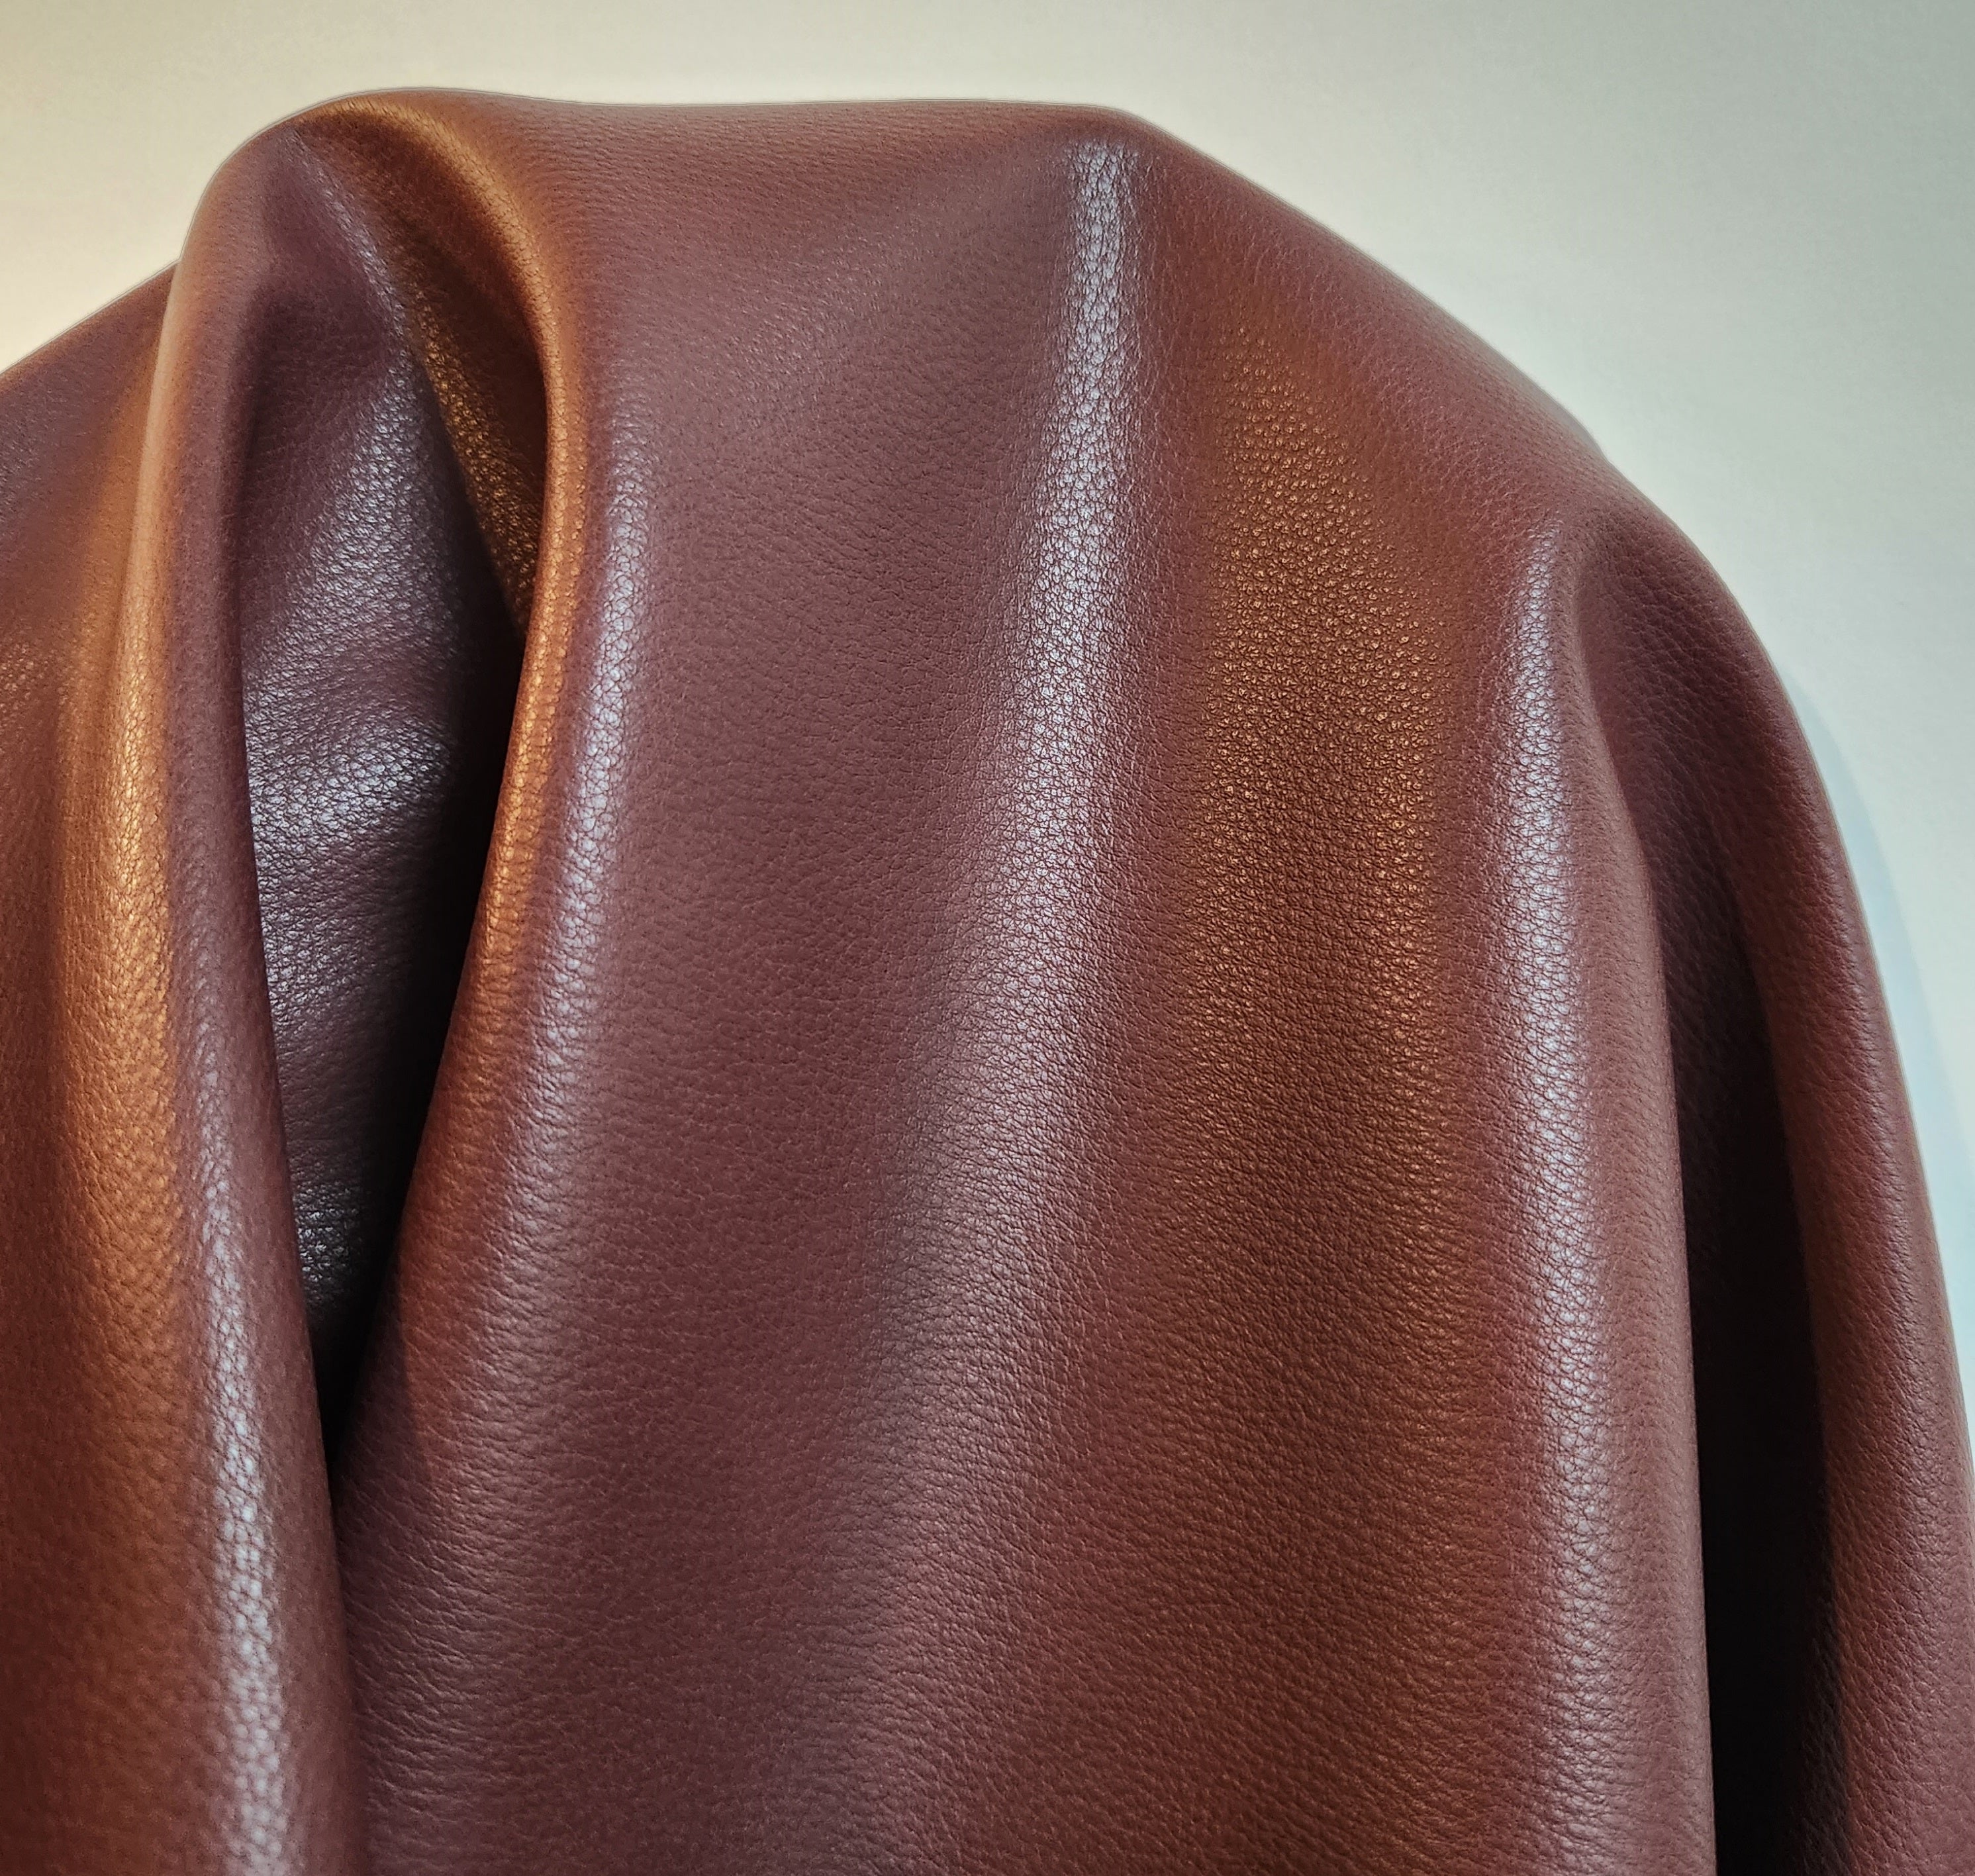 Merlot Burgundy Heritage collection Pebblegrain tumbled Faux Vegan leather